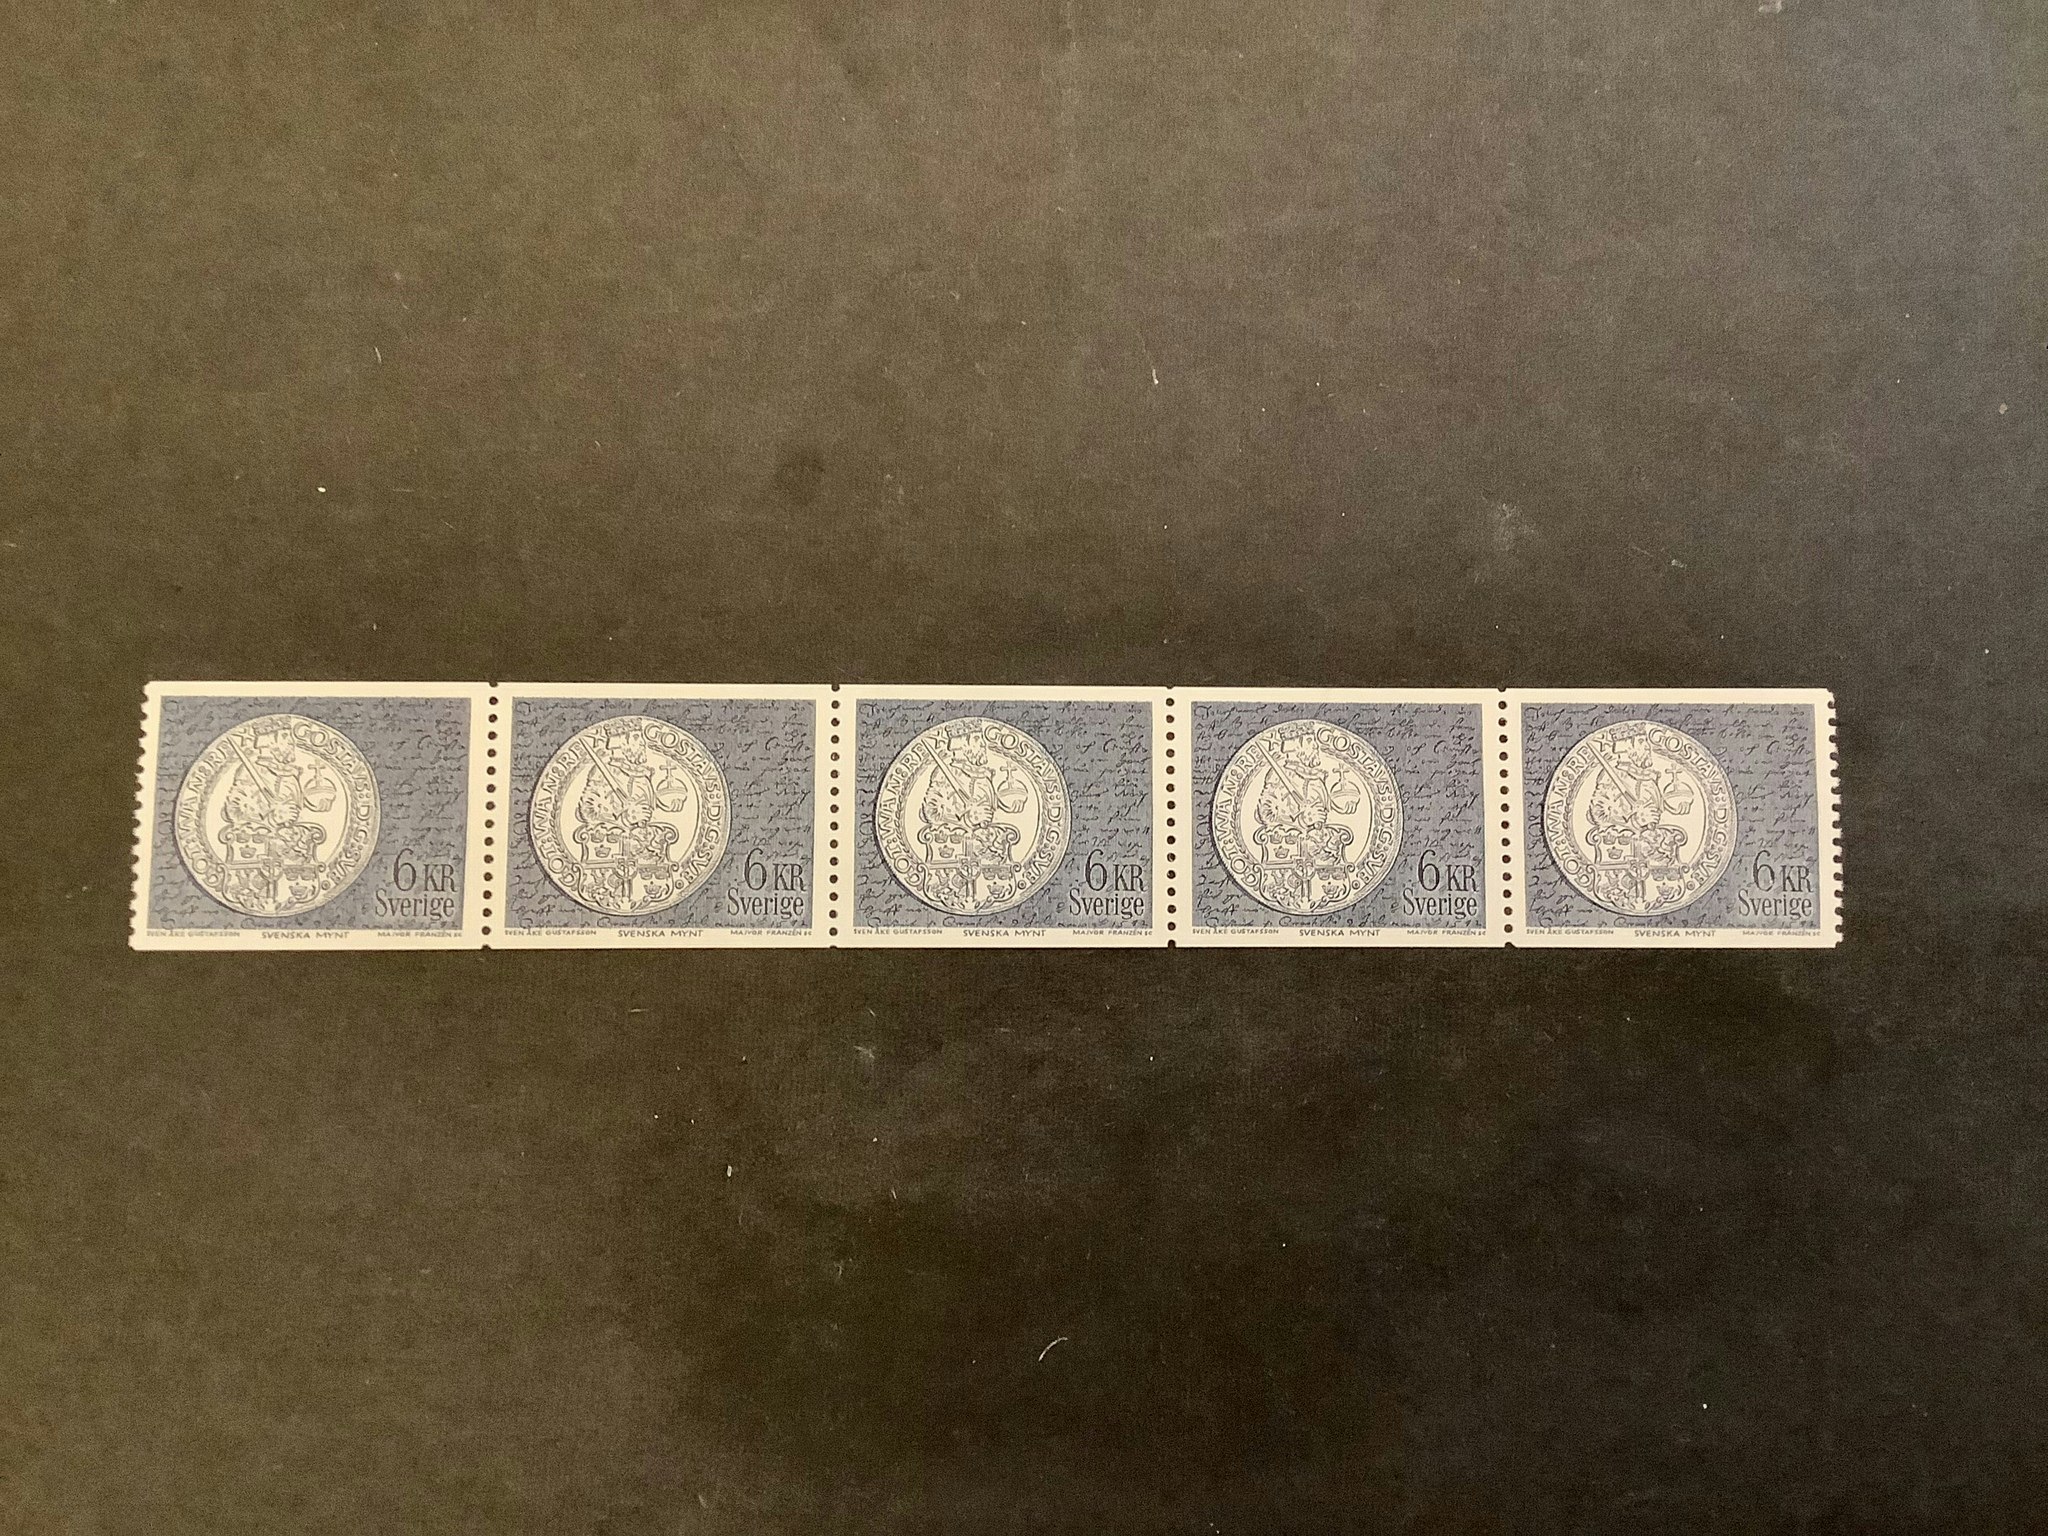 Myntmotiv facit nr 774 V2 postfriskt 5-strip utan fl.